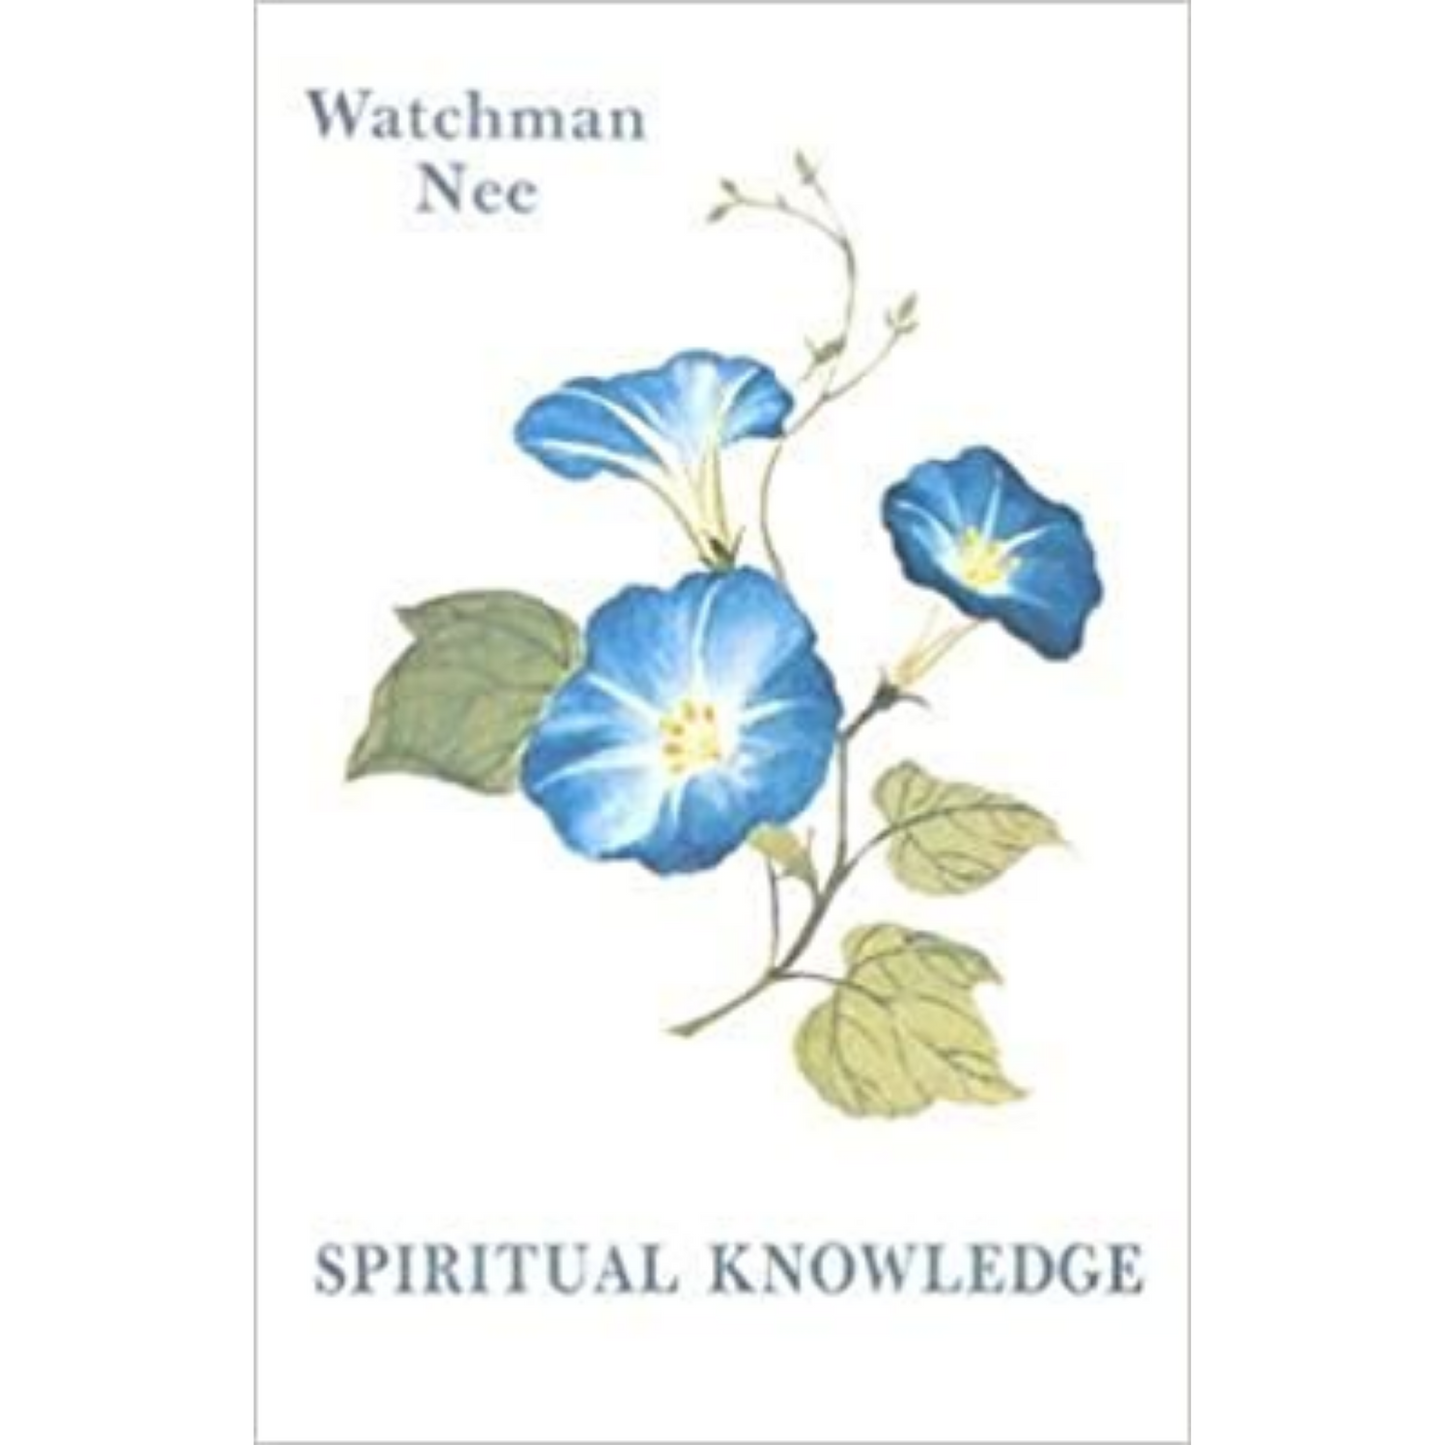 Spiritual Knowledge